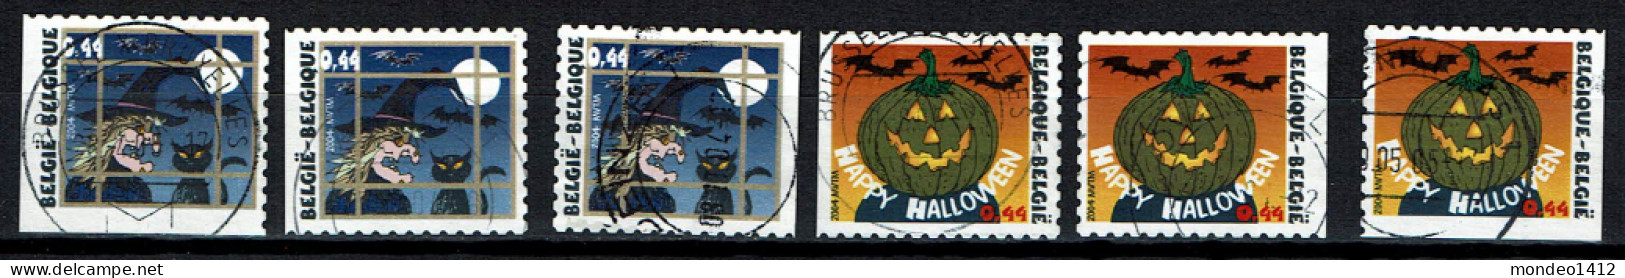 België OBP 3324/3325 - Halloween Pumpkin - Witch - Gebraucht